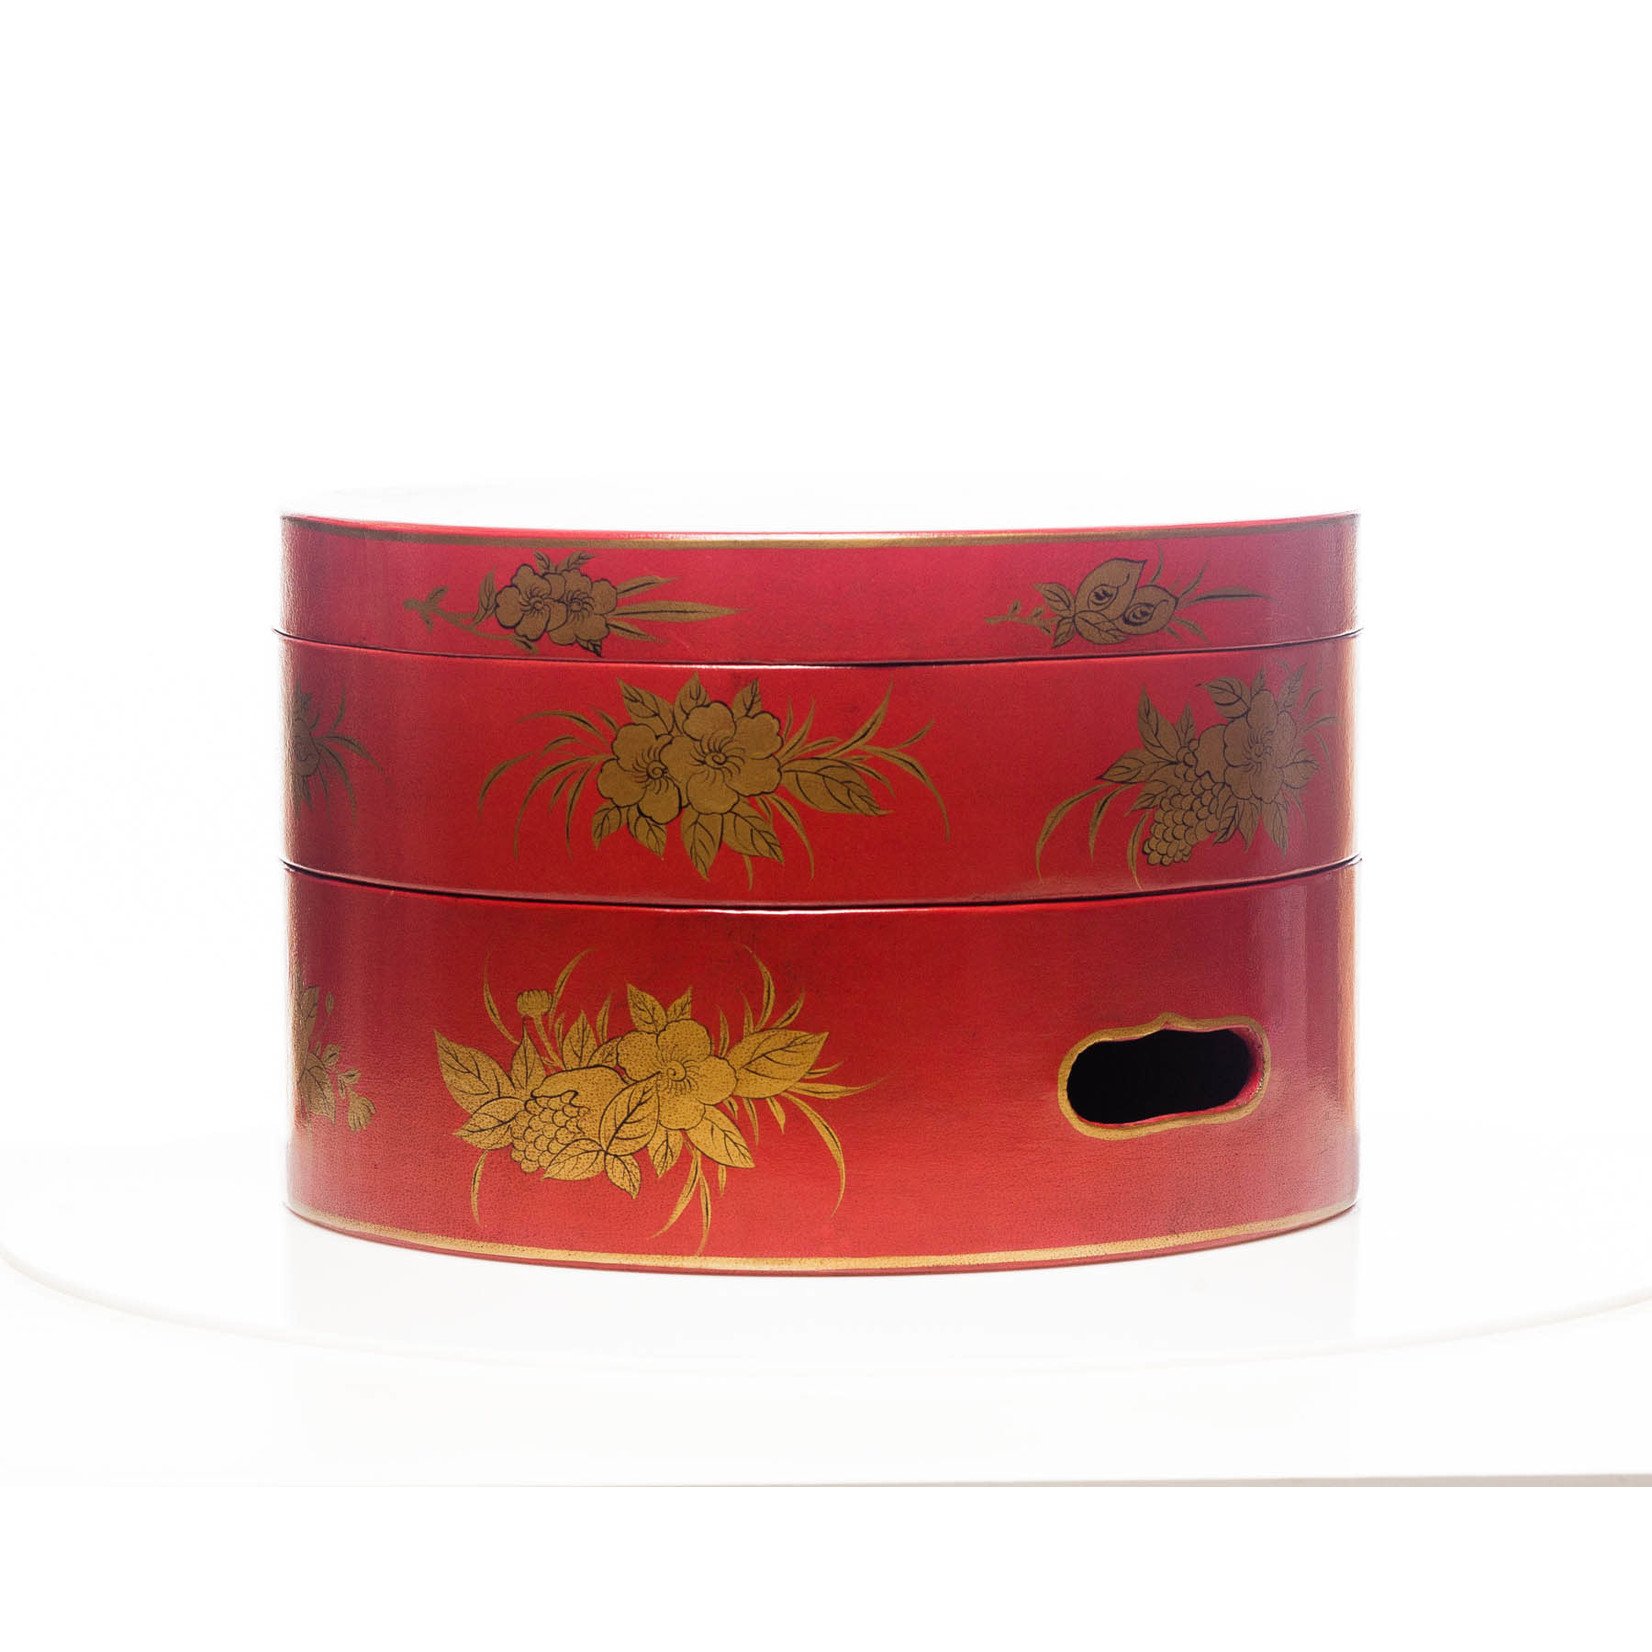 Lawrence & Scott Mandarin Red Nurture 2-Tier Round Leather Sewing Box (14")